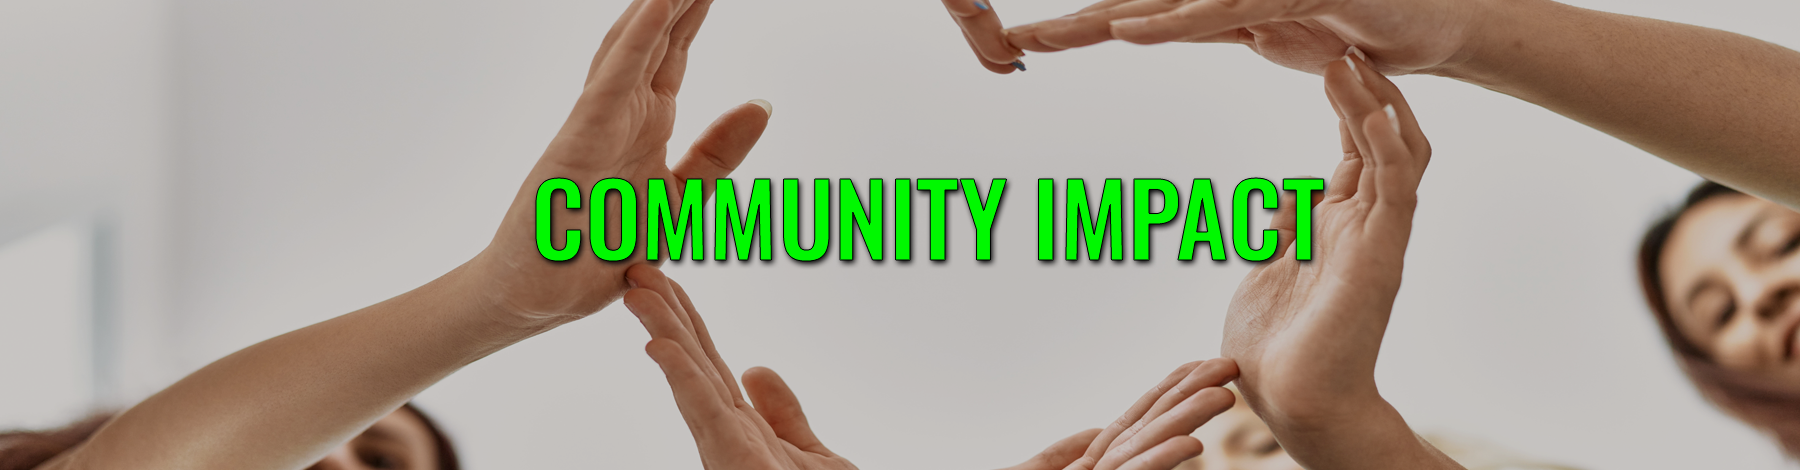 Community Impact